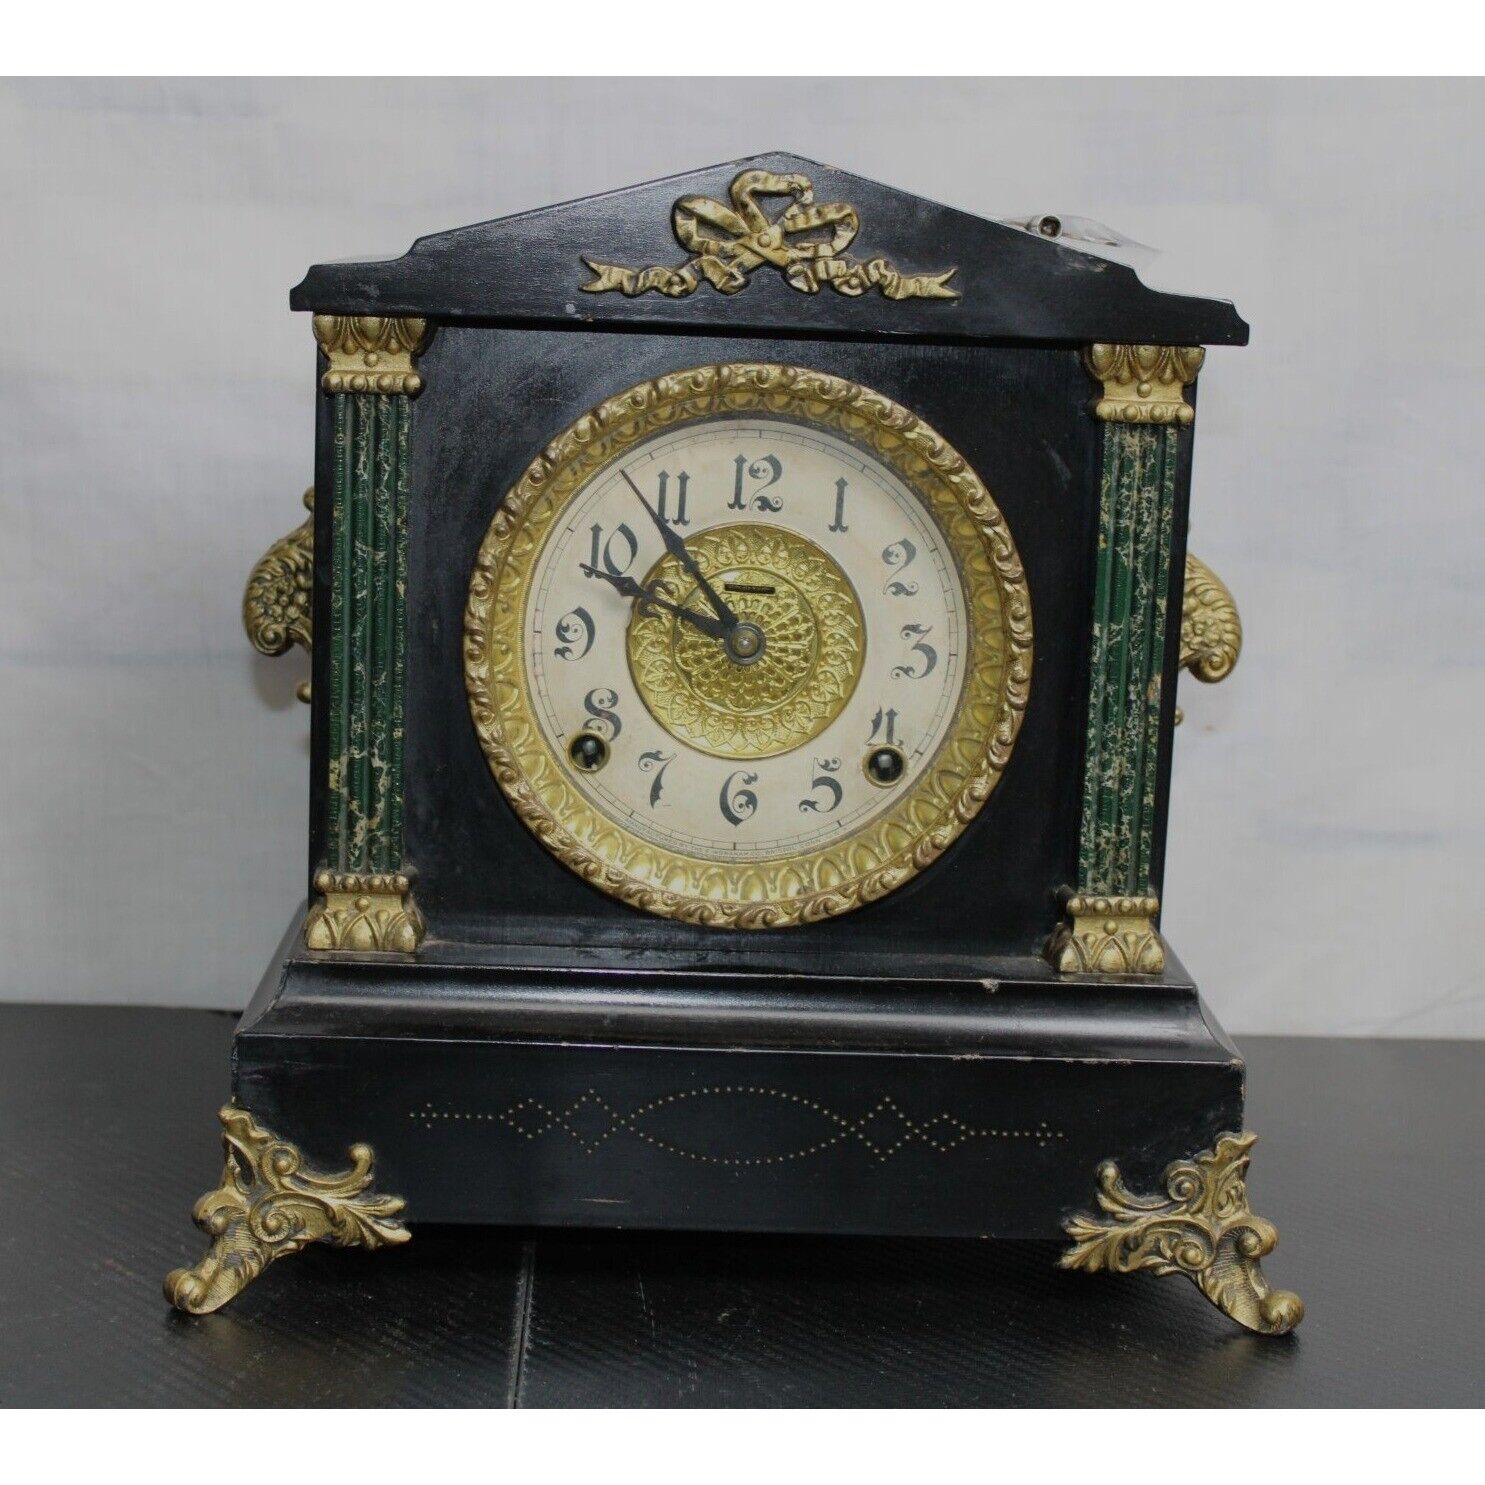 Vintage Mantle Clock - The Ingraham Co. - USA Made